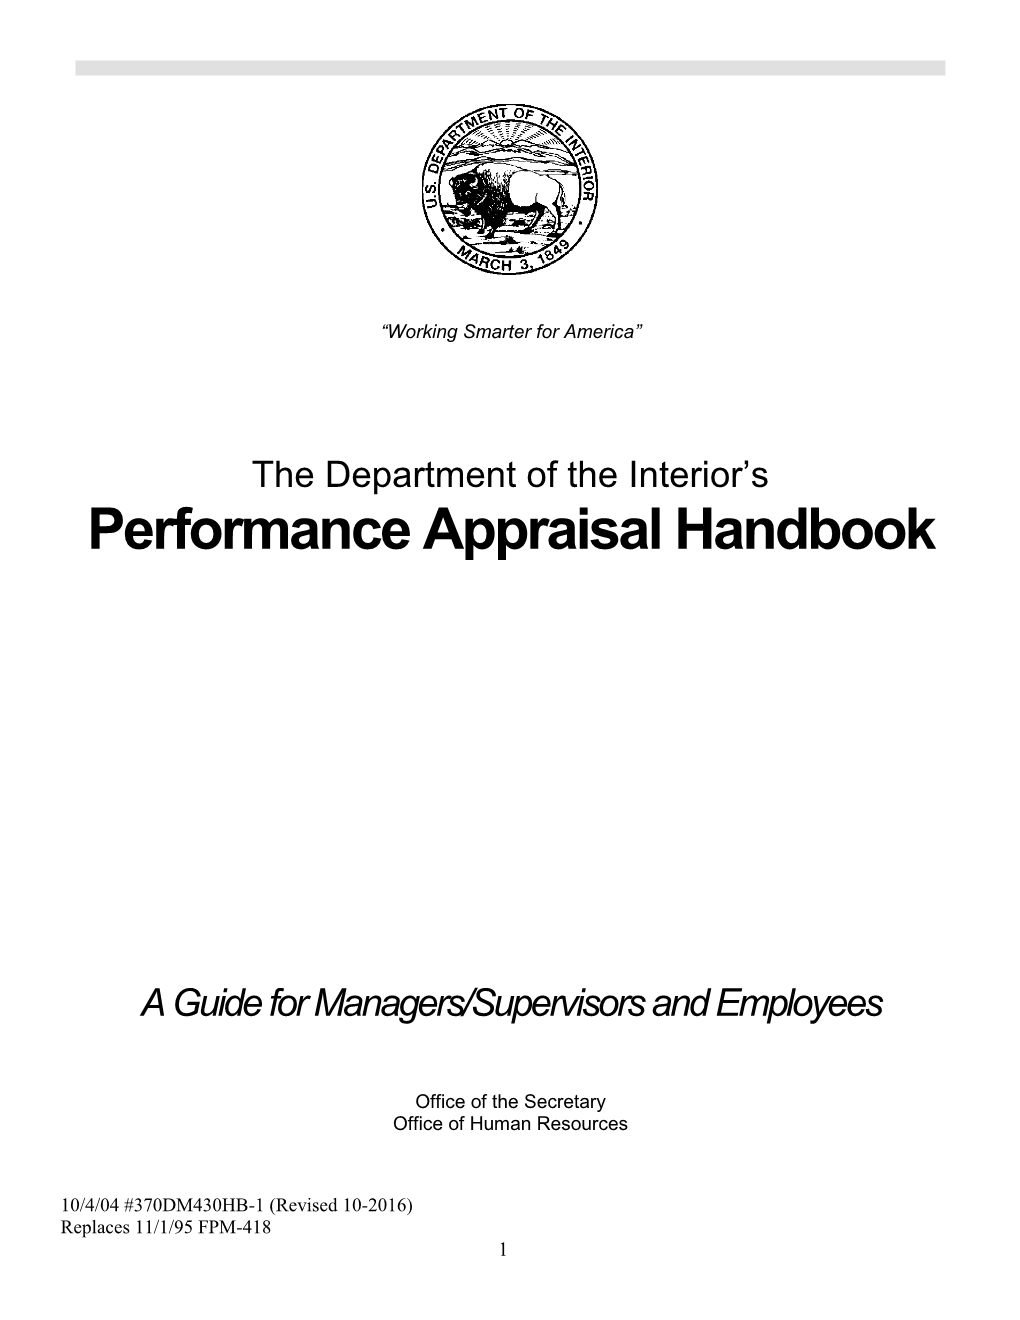 DOI Performance Appraisal Handbook